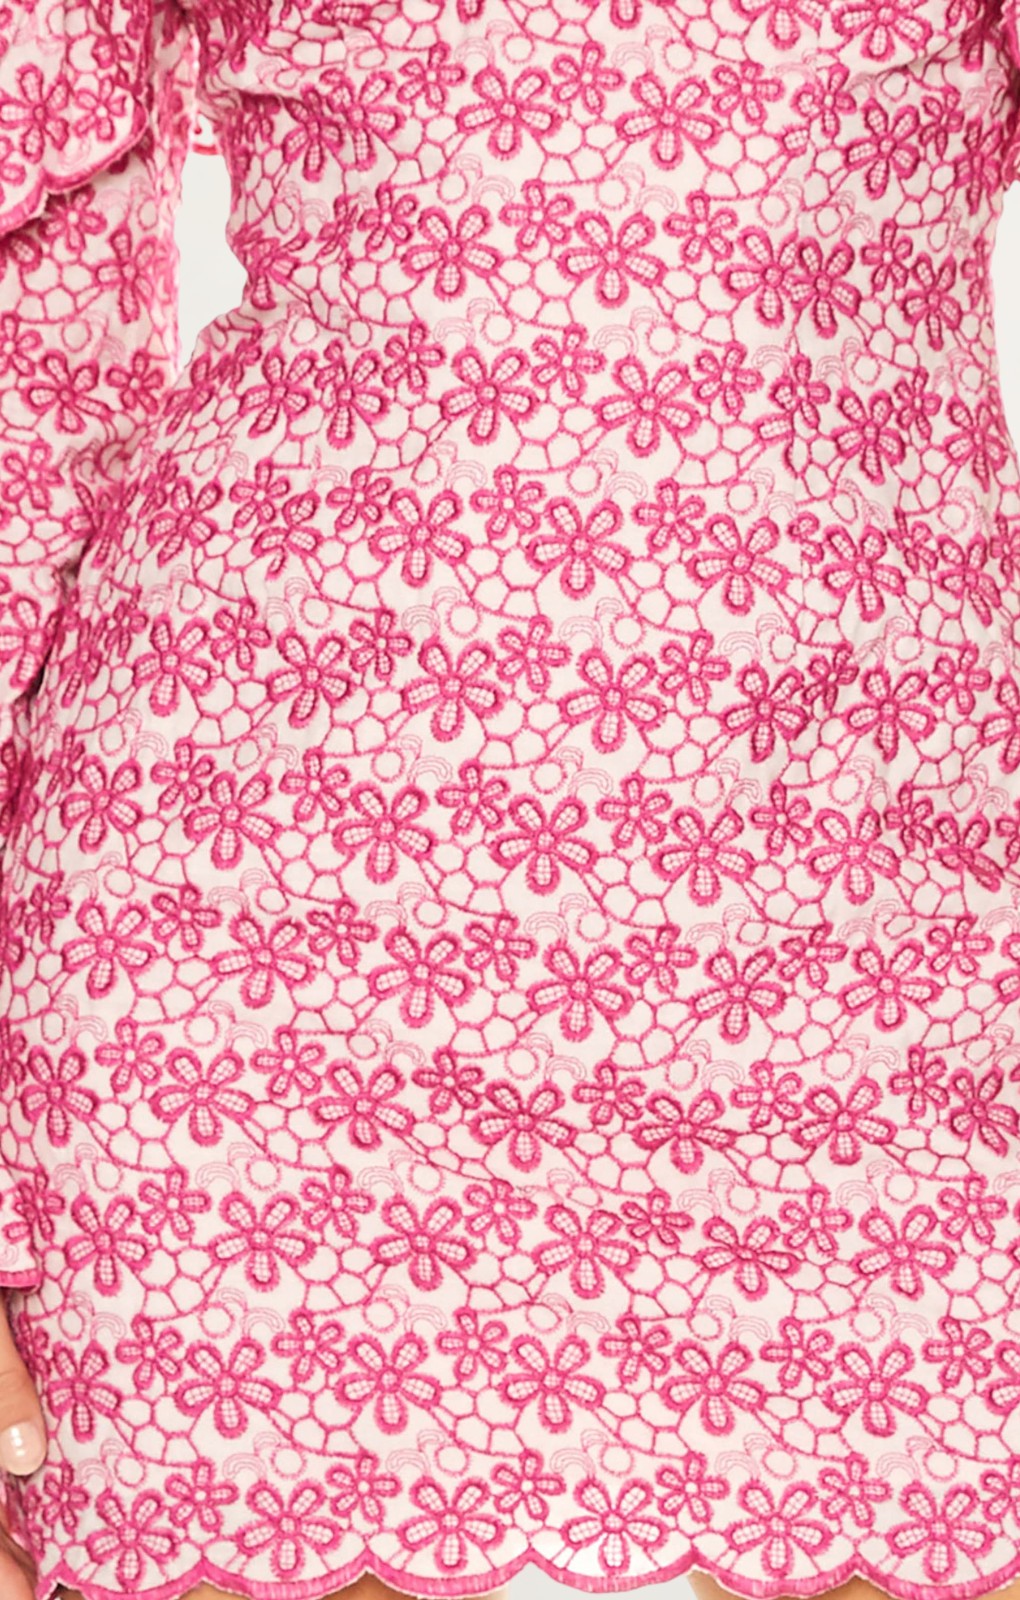 Talulah Pink Tainted Love Mini Dress product image